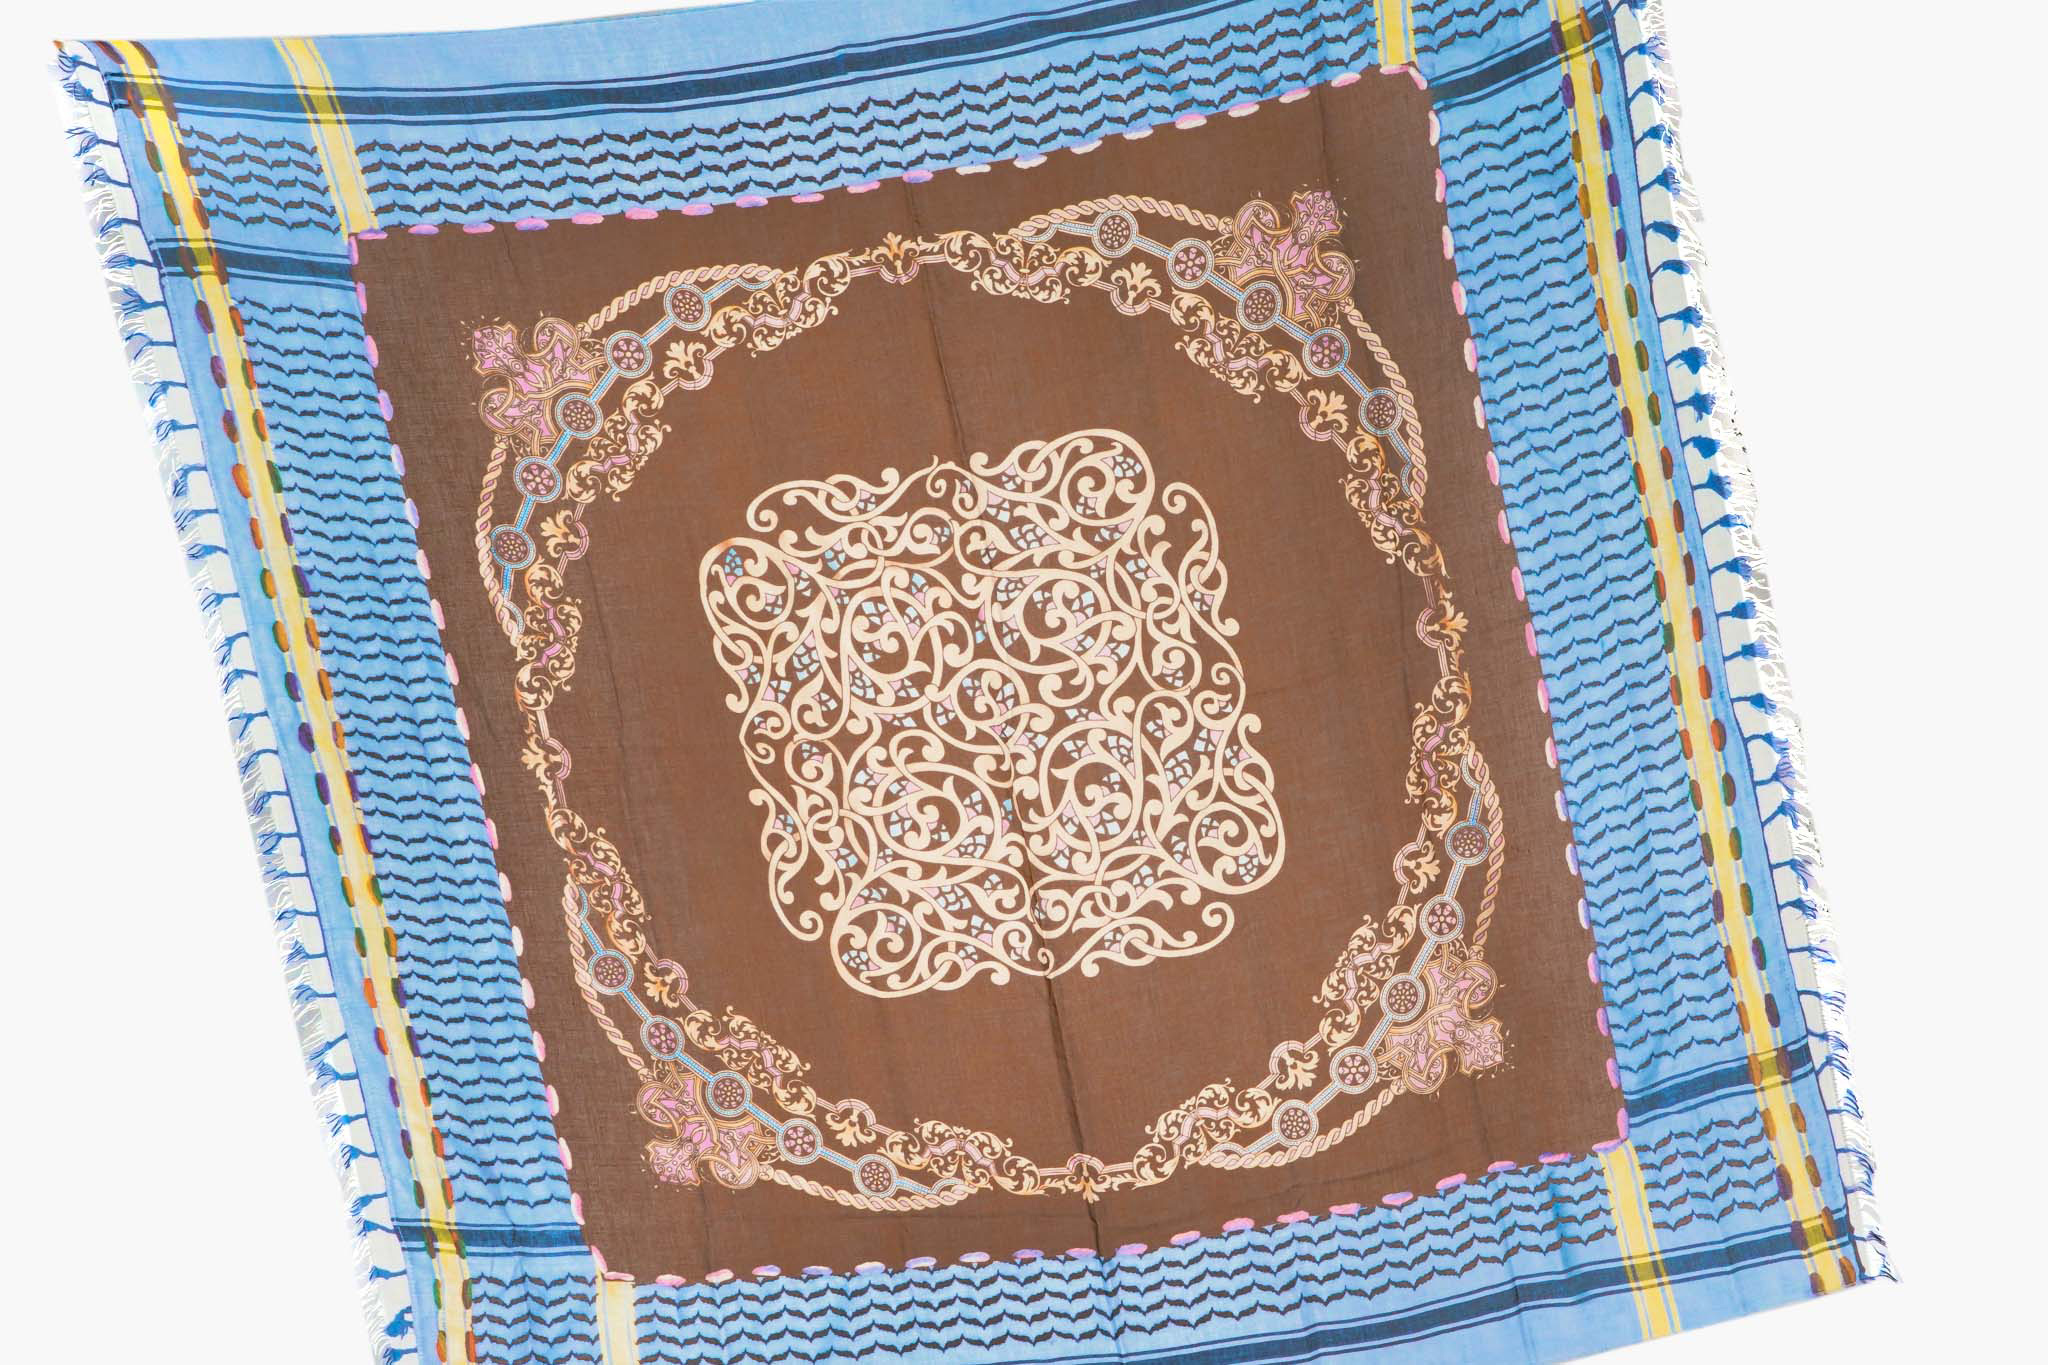 3d print of a keffiyeh with baroque foulard